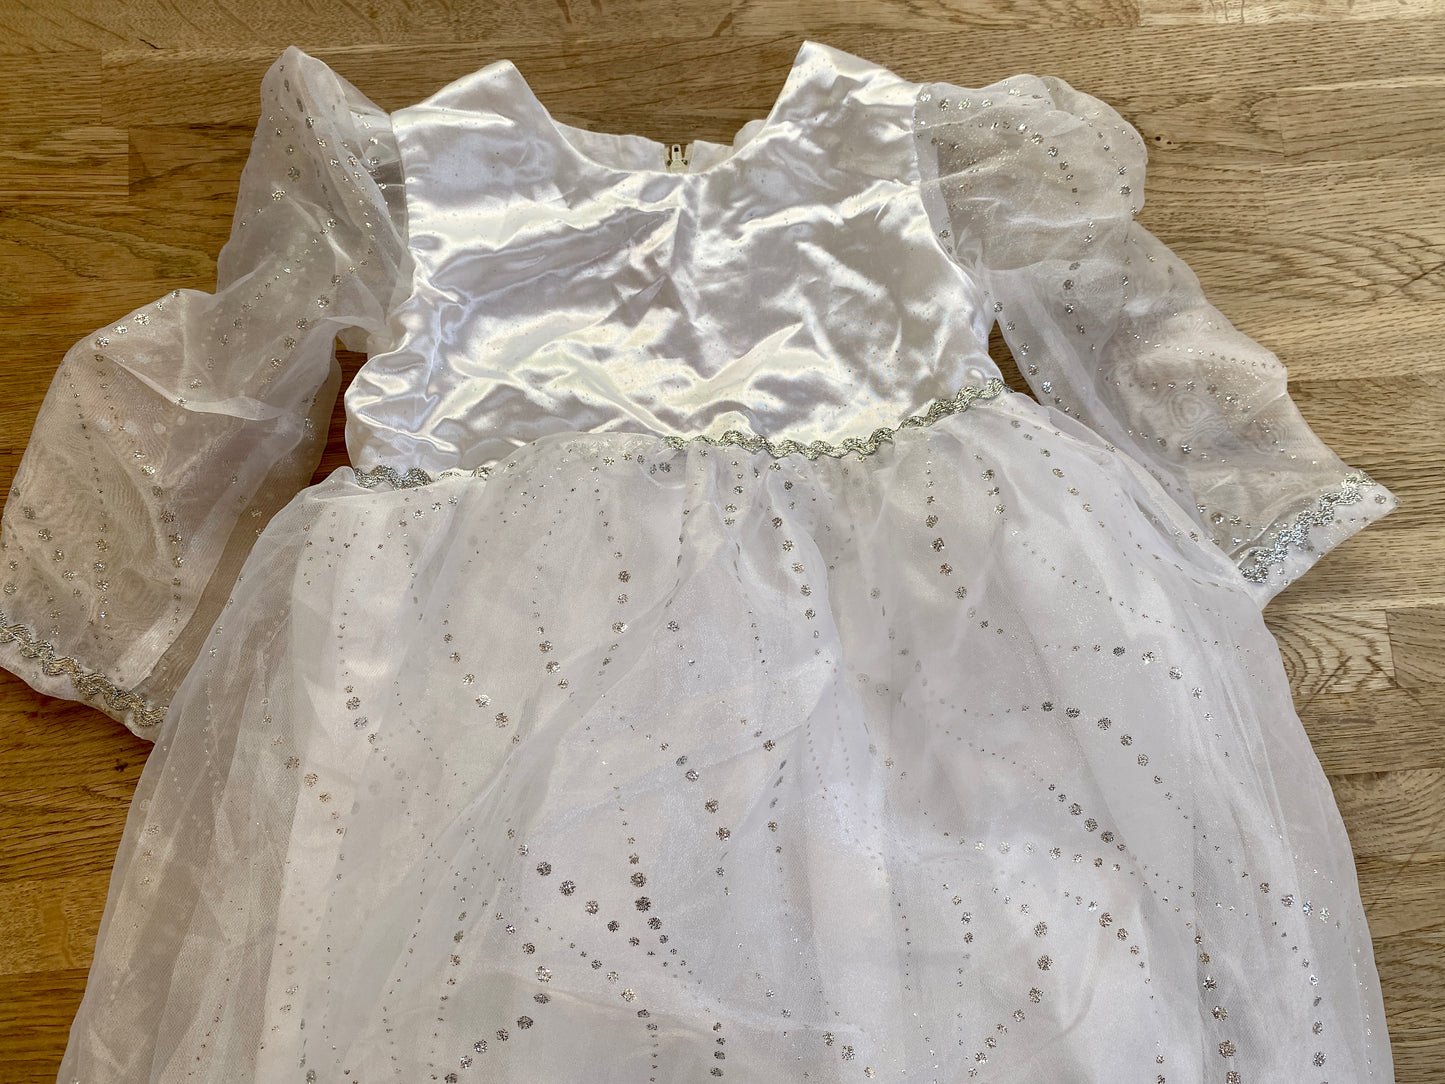 Costume - Fancy Dress-Up White Dress (Pre-Loved) Size 4/5